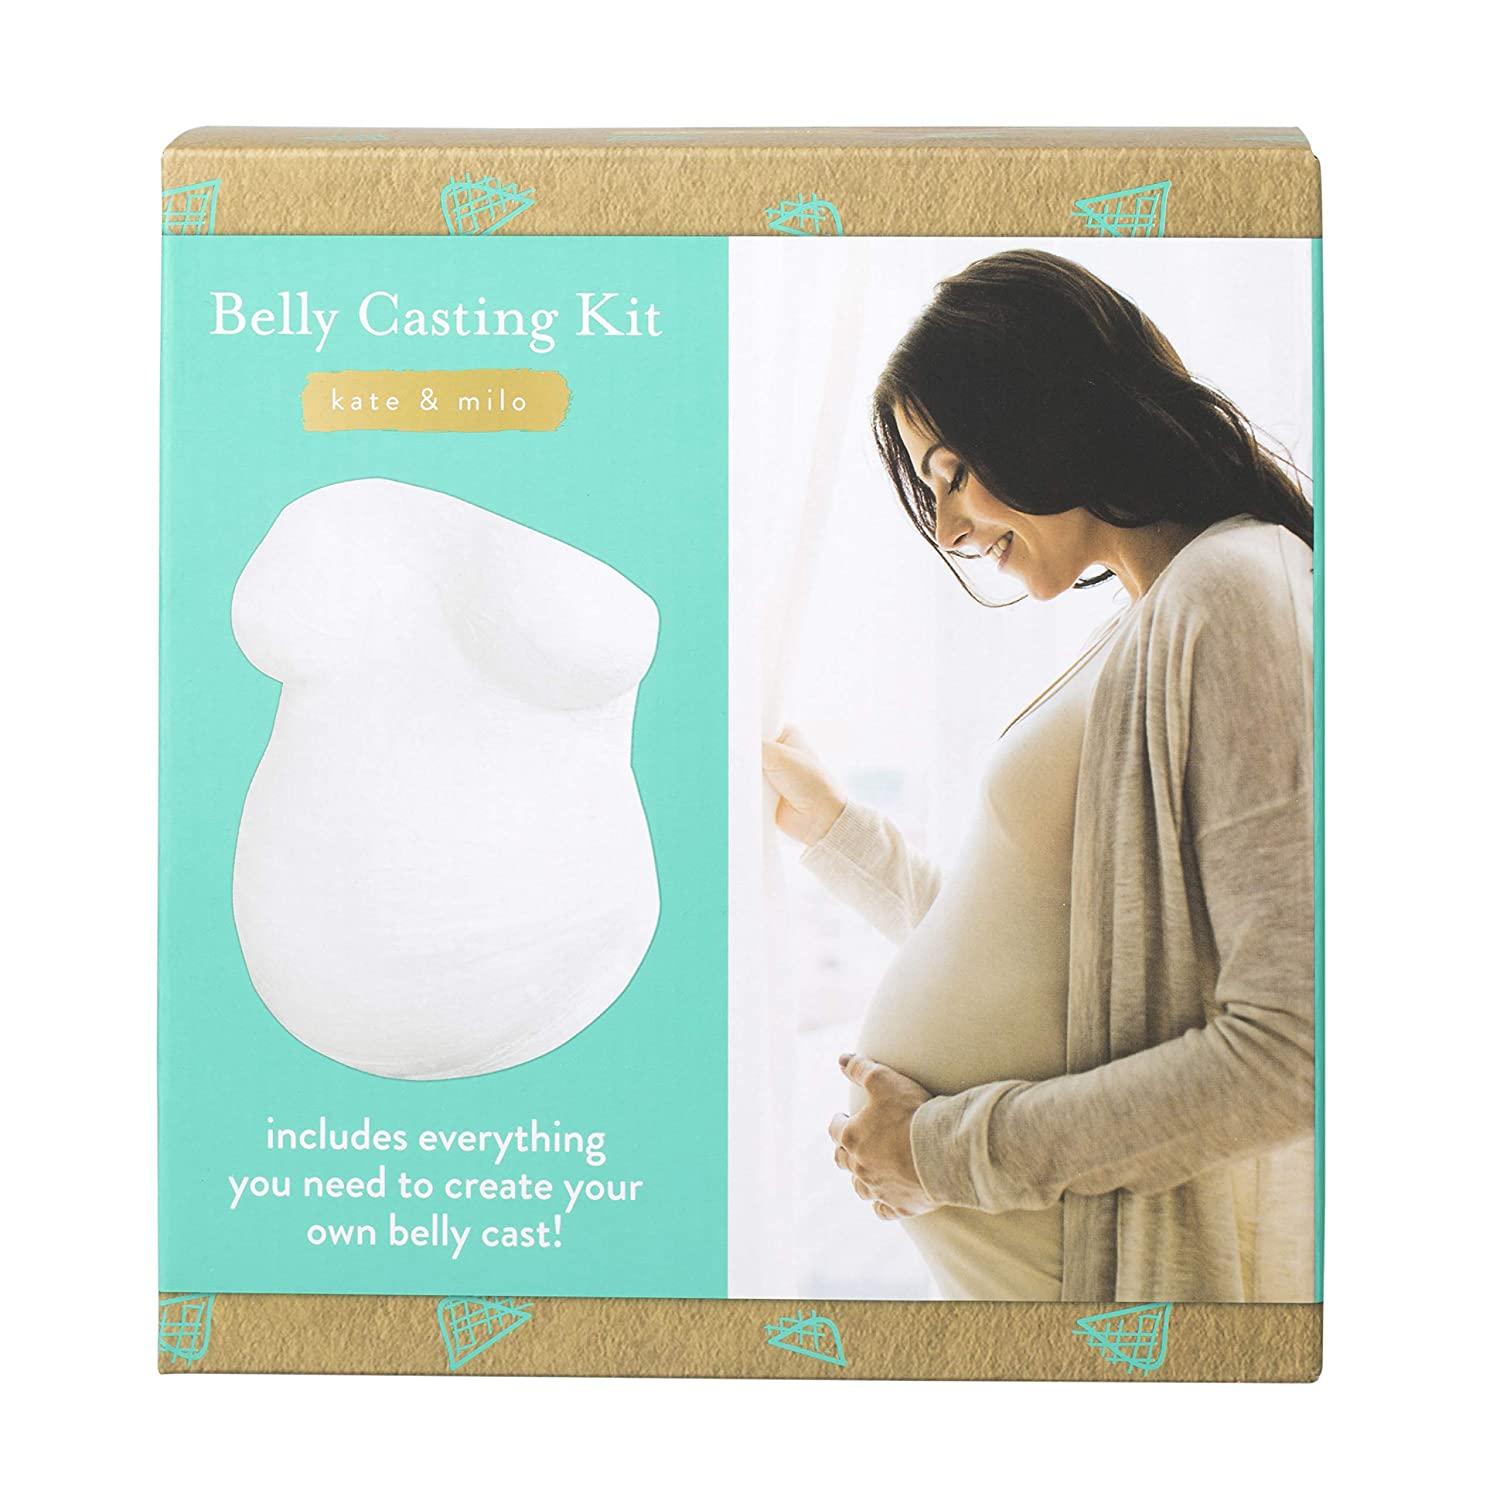 NEW Kate & Milo Belly Casting Kit Gender-Neutral Keepsake Baby